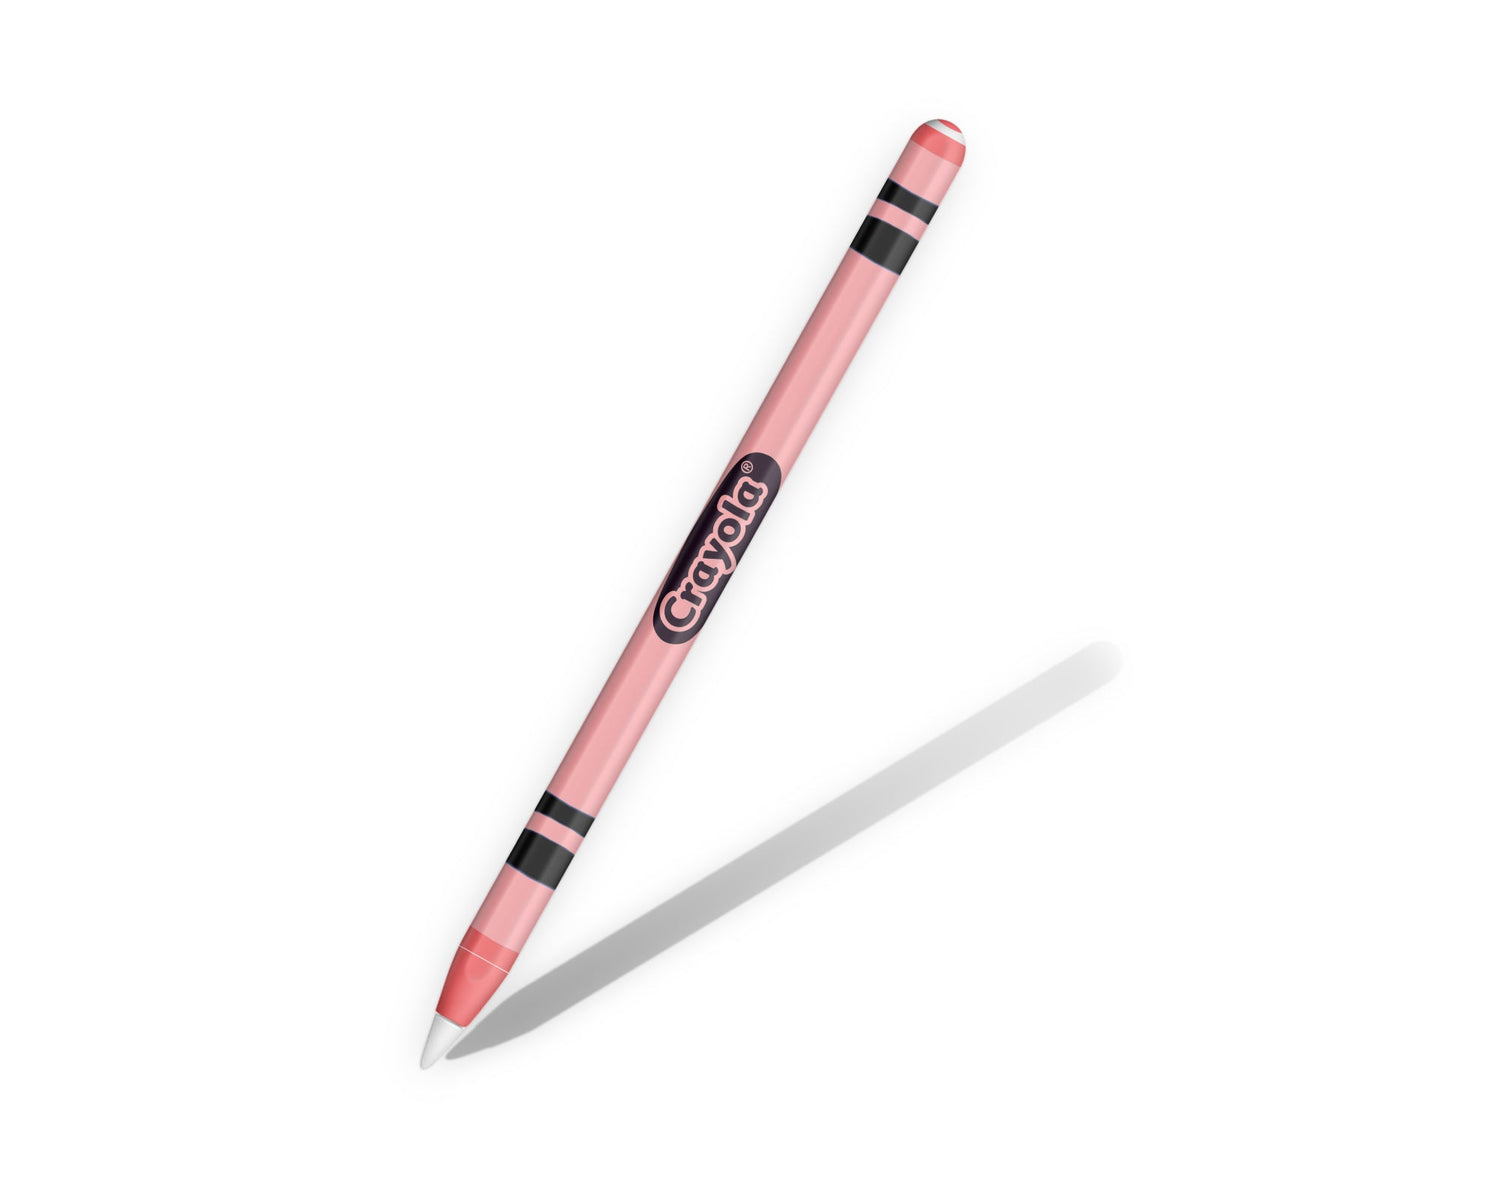 Lux Skins Apple Pencil Crayloa Hot Pink 1st Generation Skins - Art Crayola Series Skin